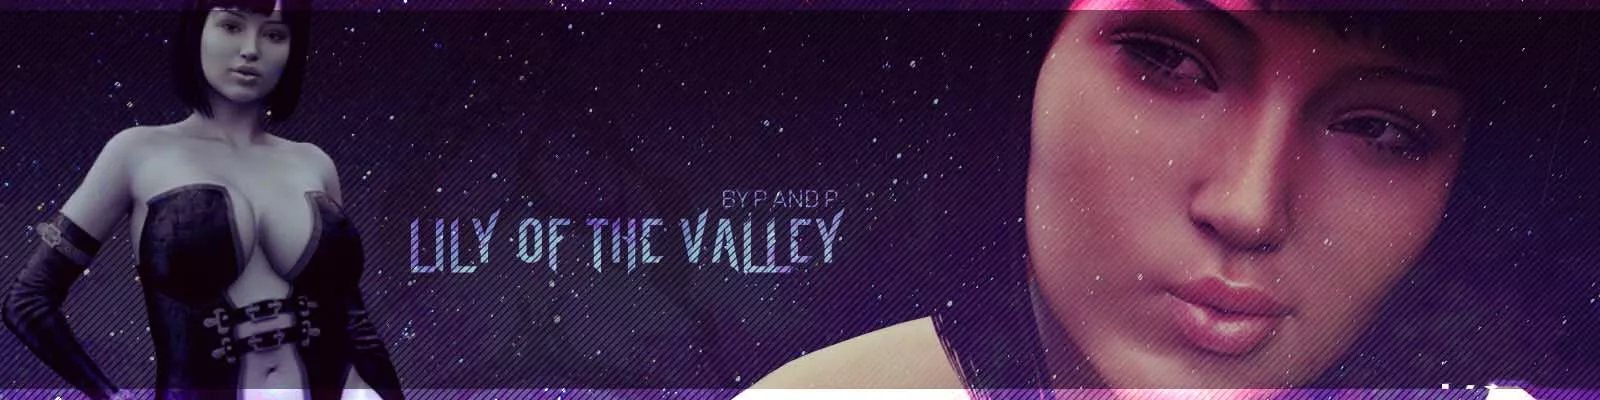 Le sexe de Lily of the Valley 3d